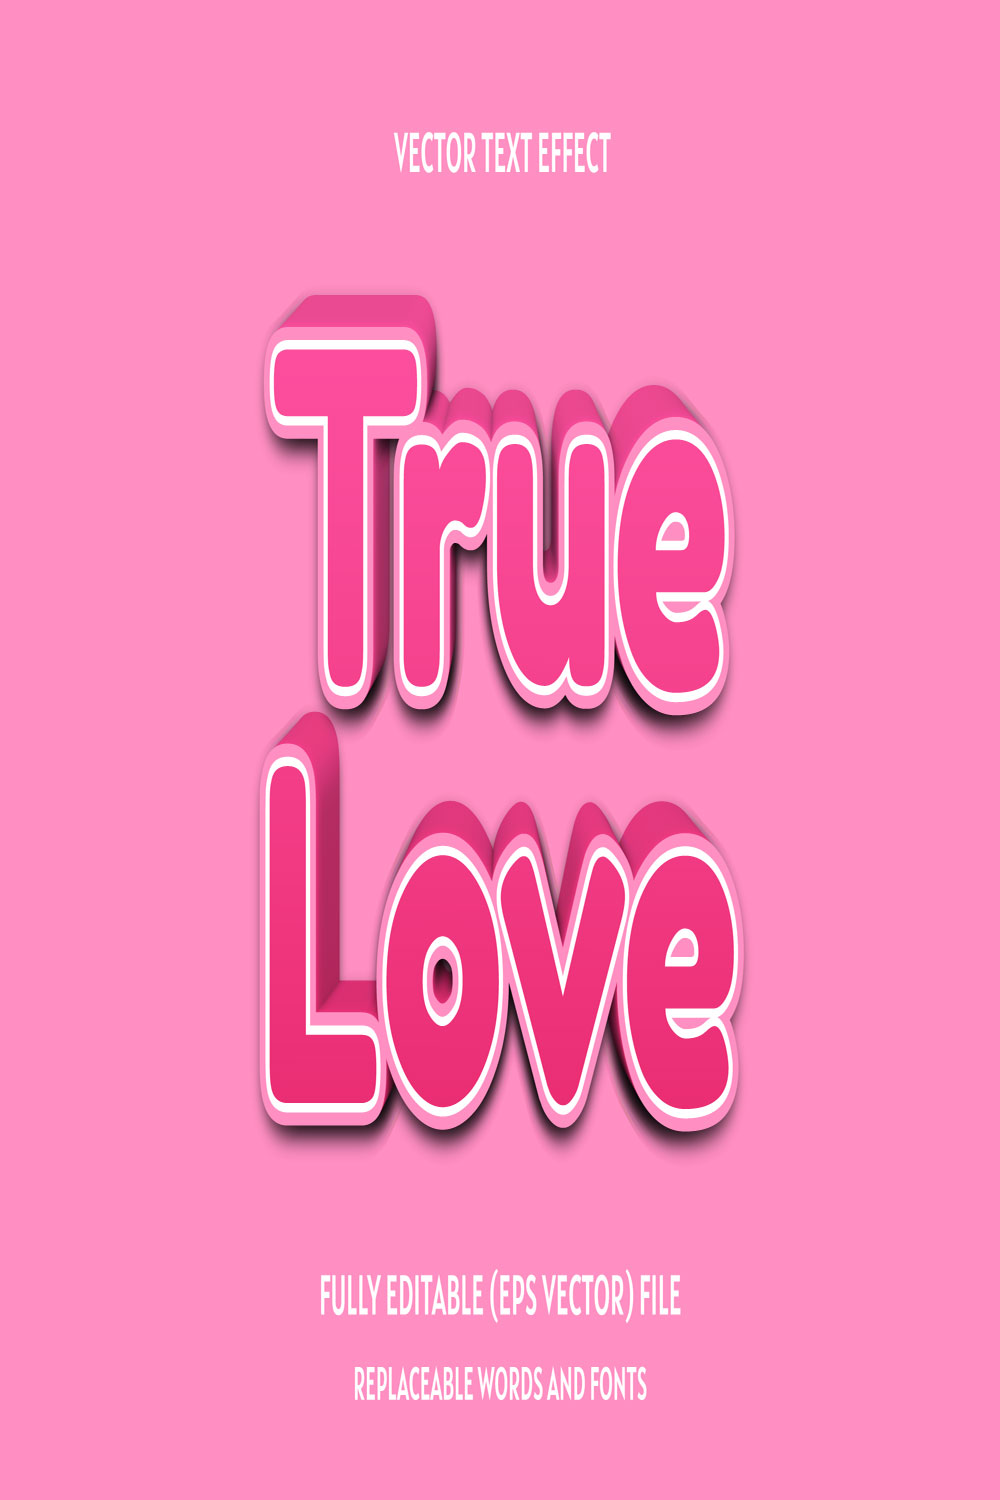 True love 3d text effect editable style pinterest preview image.